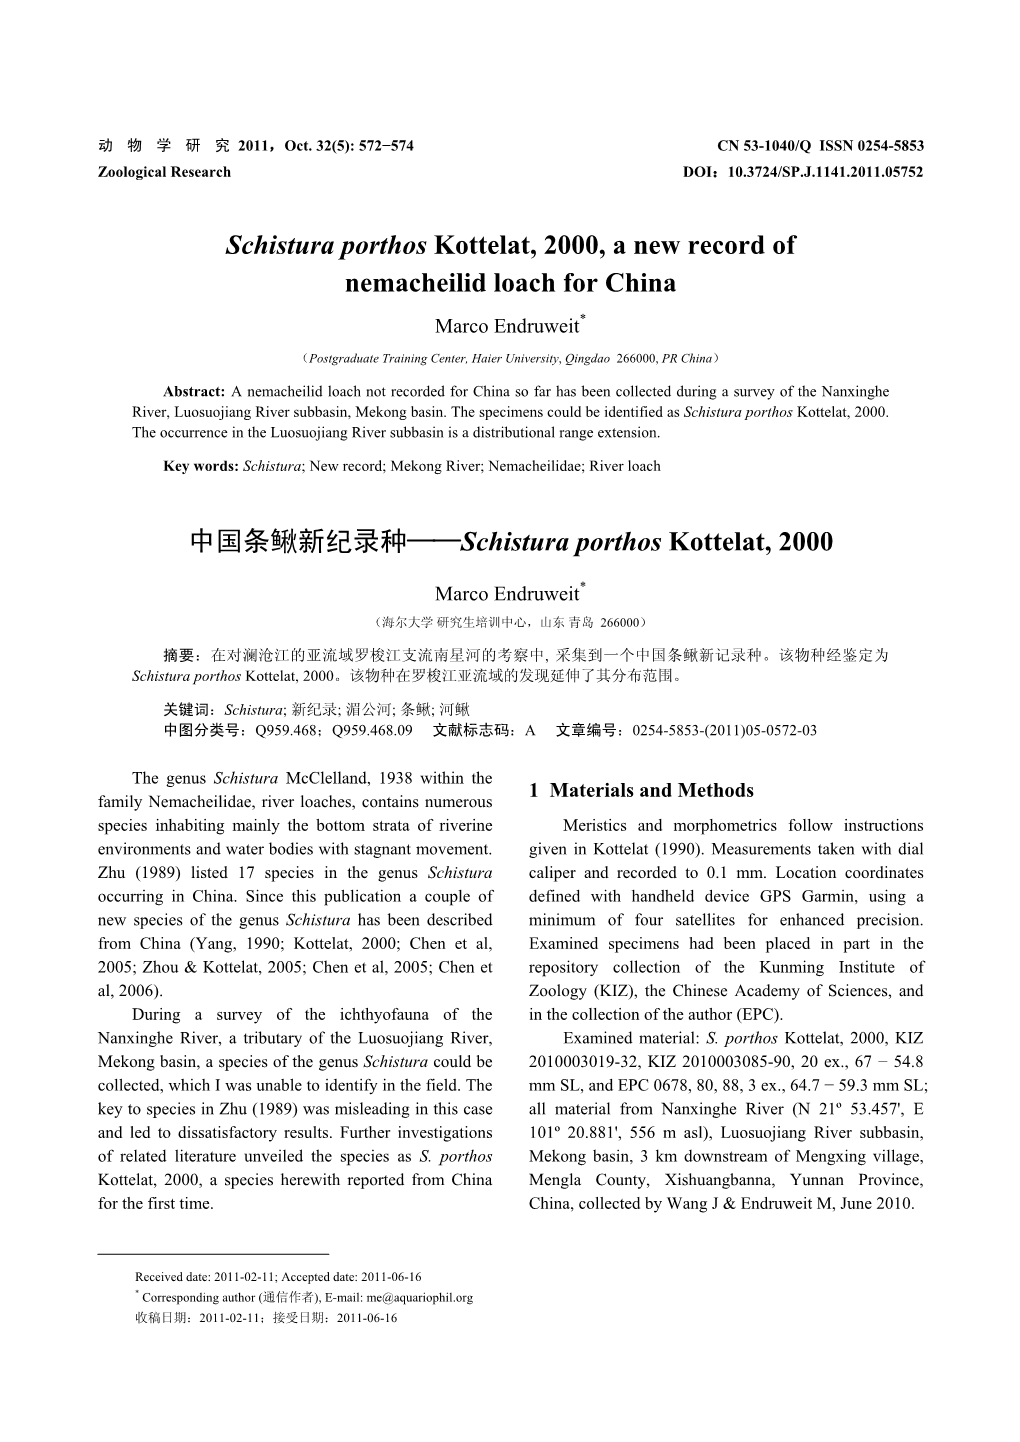 Schistura Porthos Kottelat, 2000, a New Record of Nemacheilid Loach for China 中国条鳅新纪录种